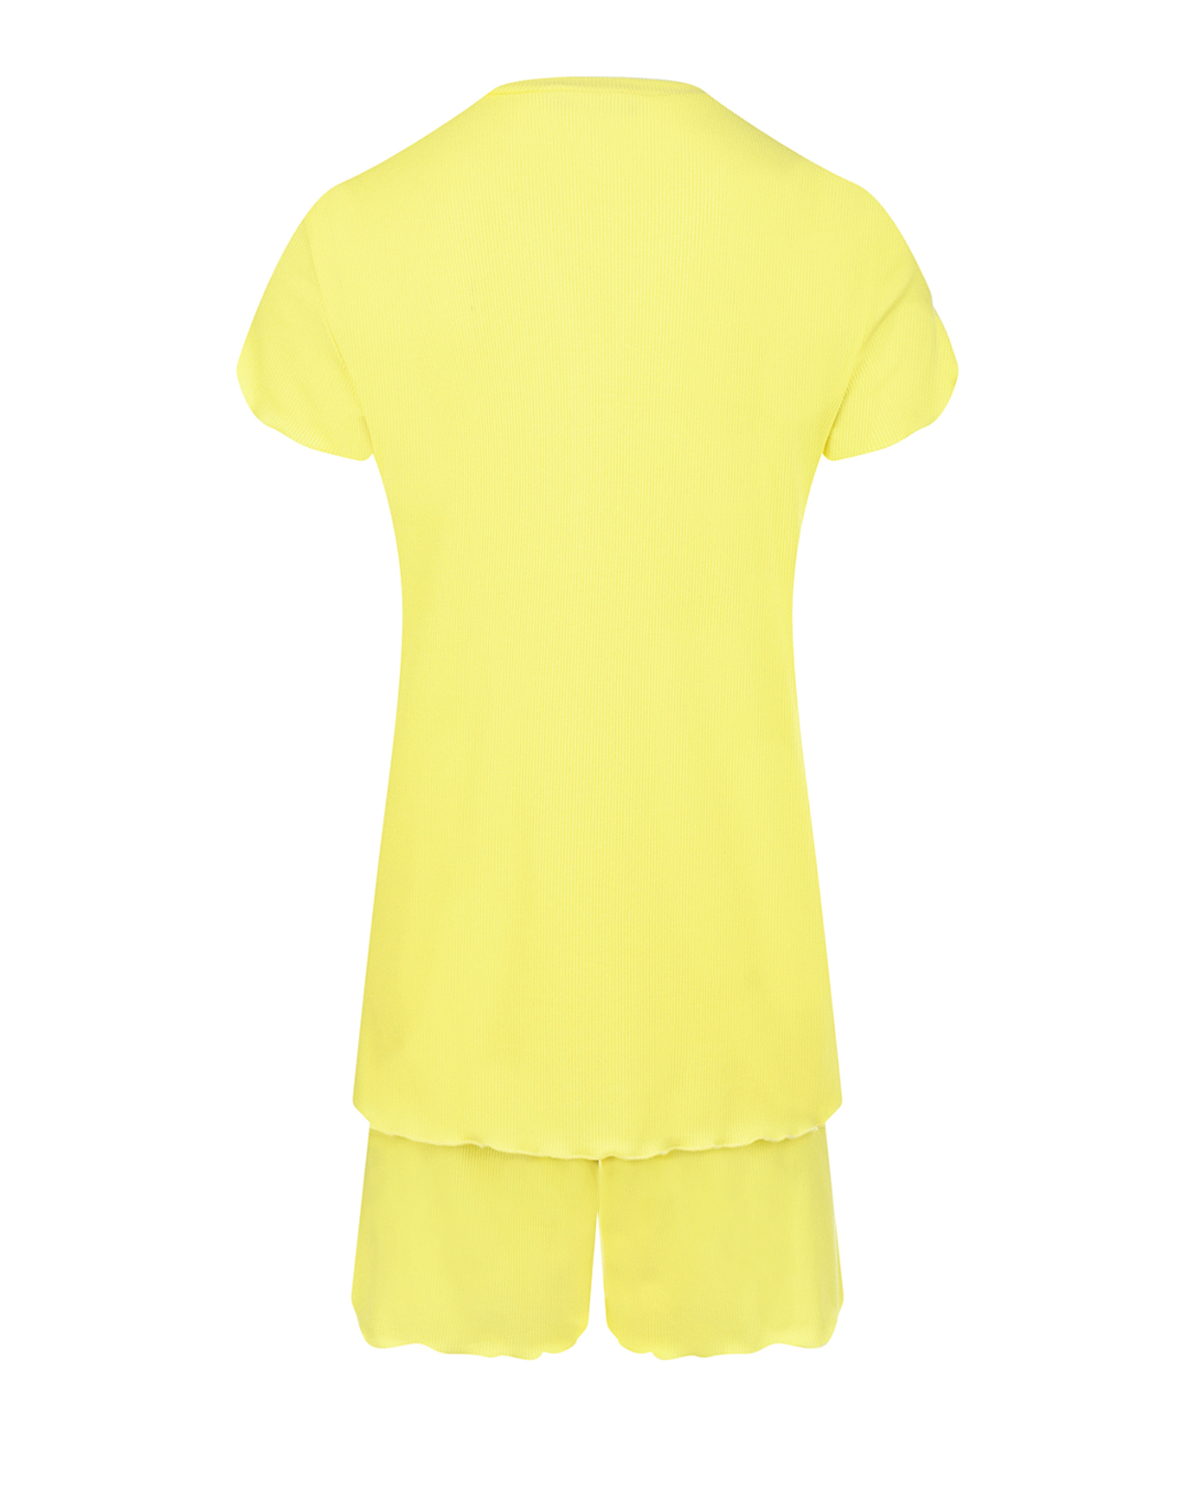 Желтая пижама: футболка и шорты Dan Maralex, размер 46, цвет желтый - фото 2